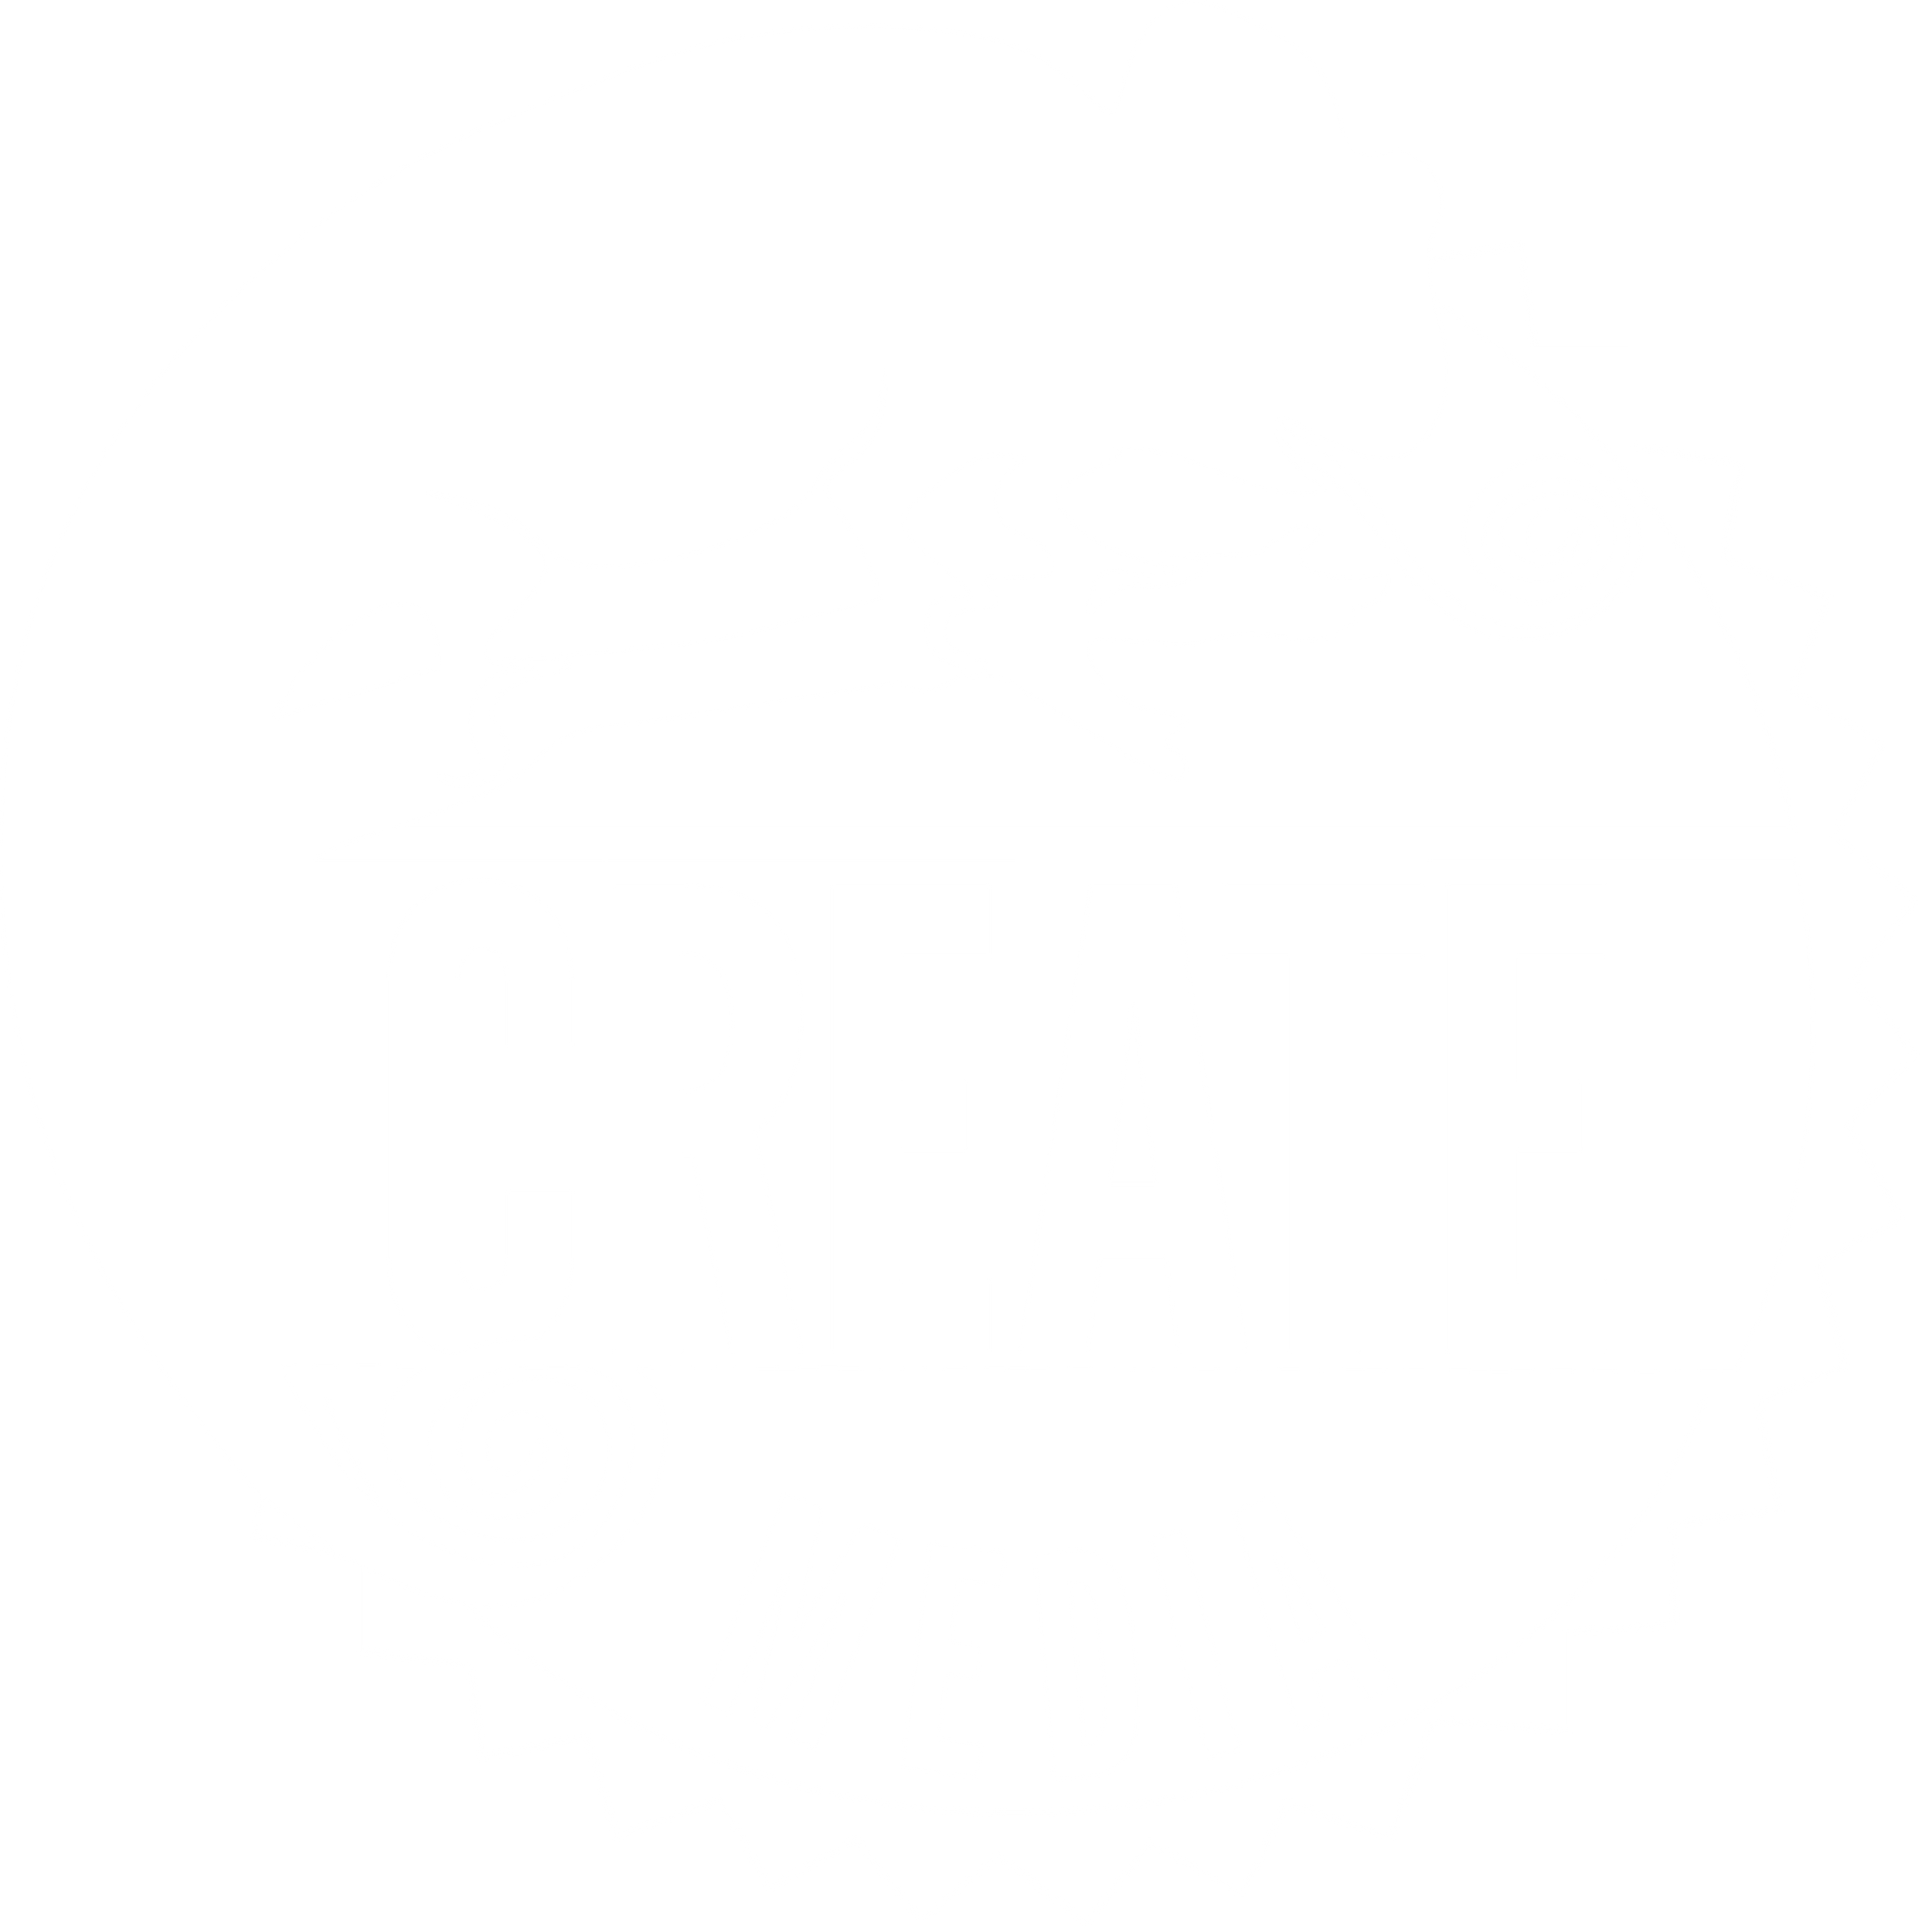 Create Media Logo